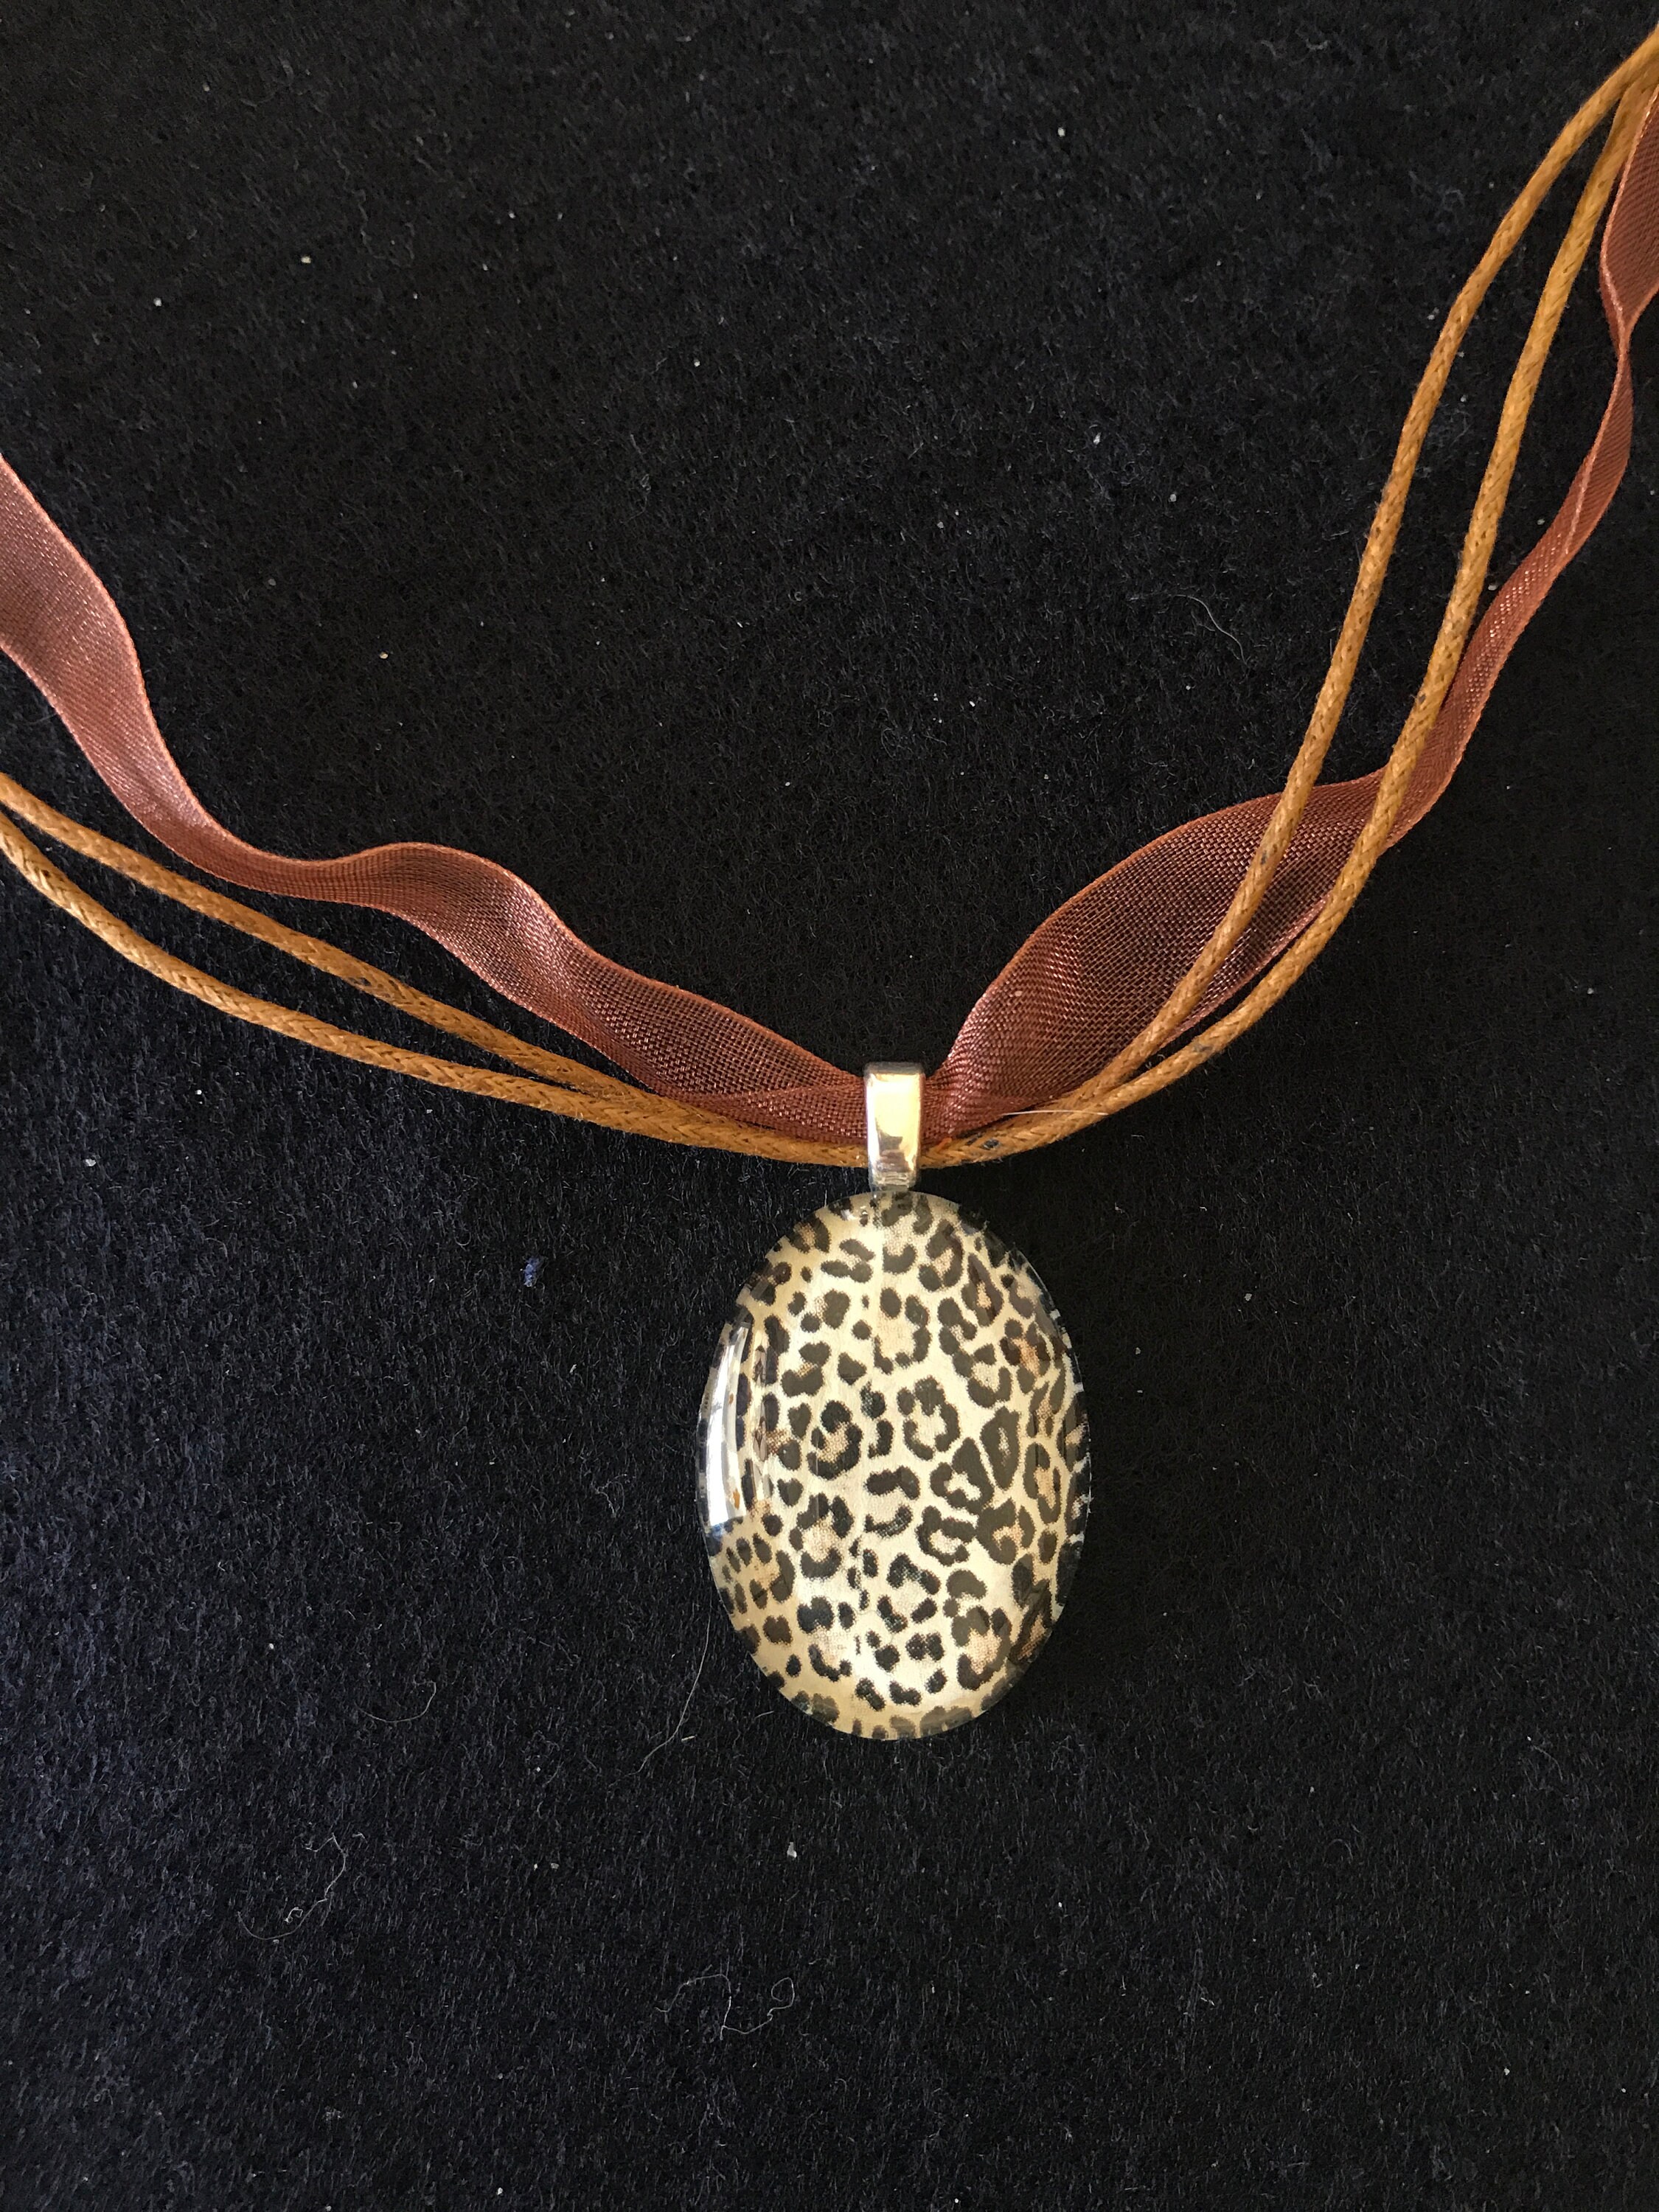 Leopard print necklace | Etsy